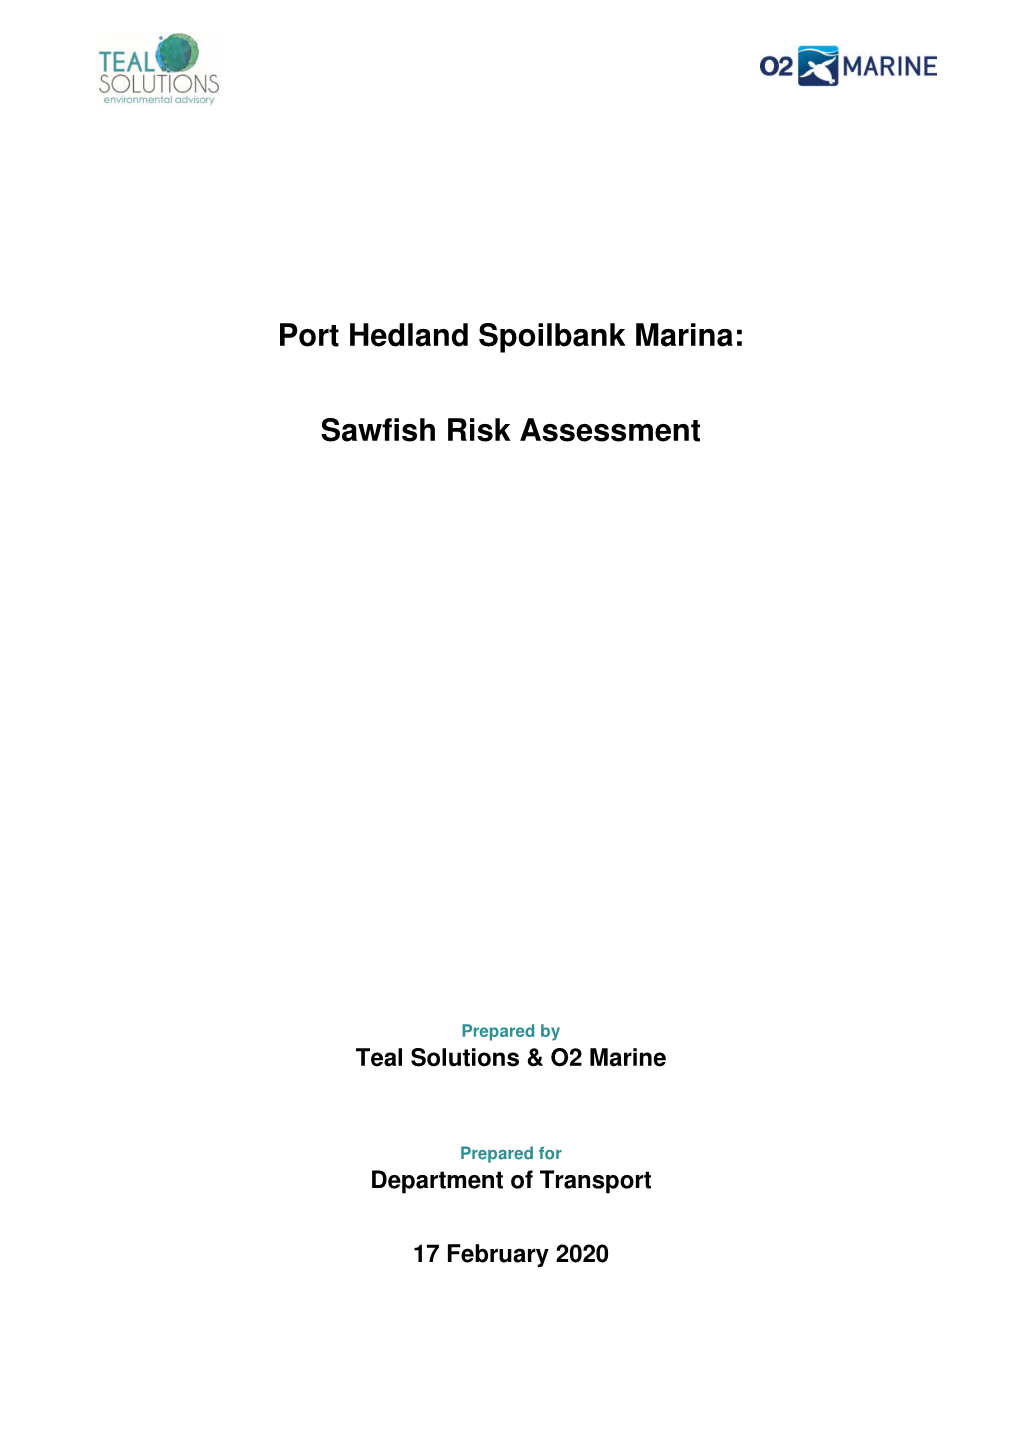 Port Hedland Spoilbank Marina: Sawfish Risk Assessment